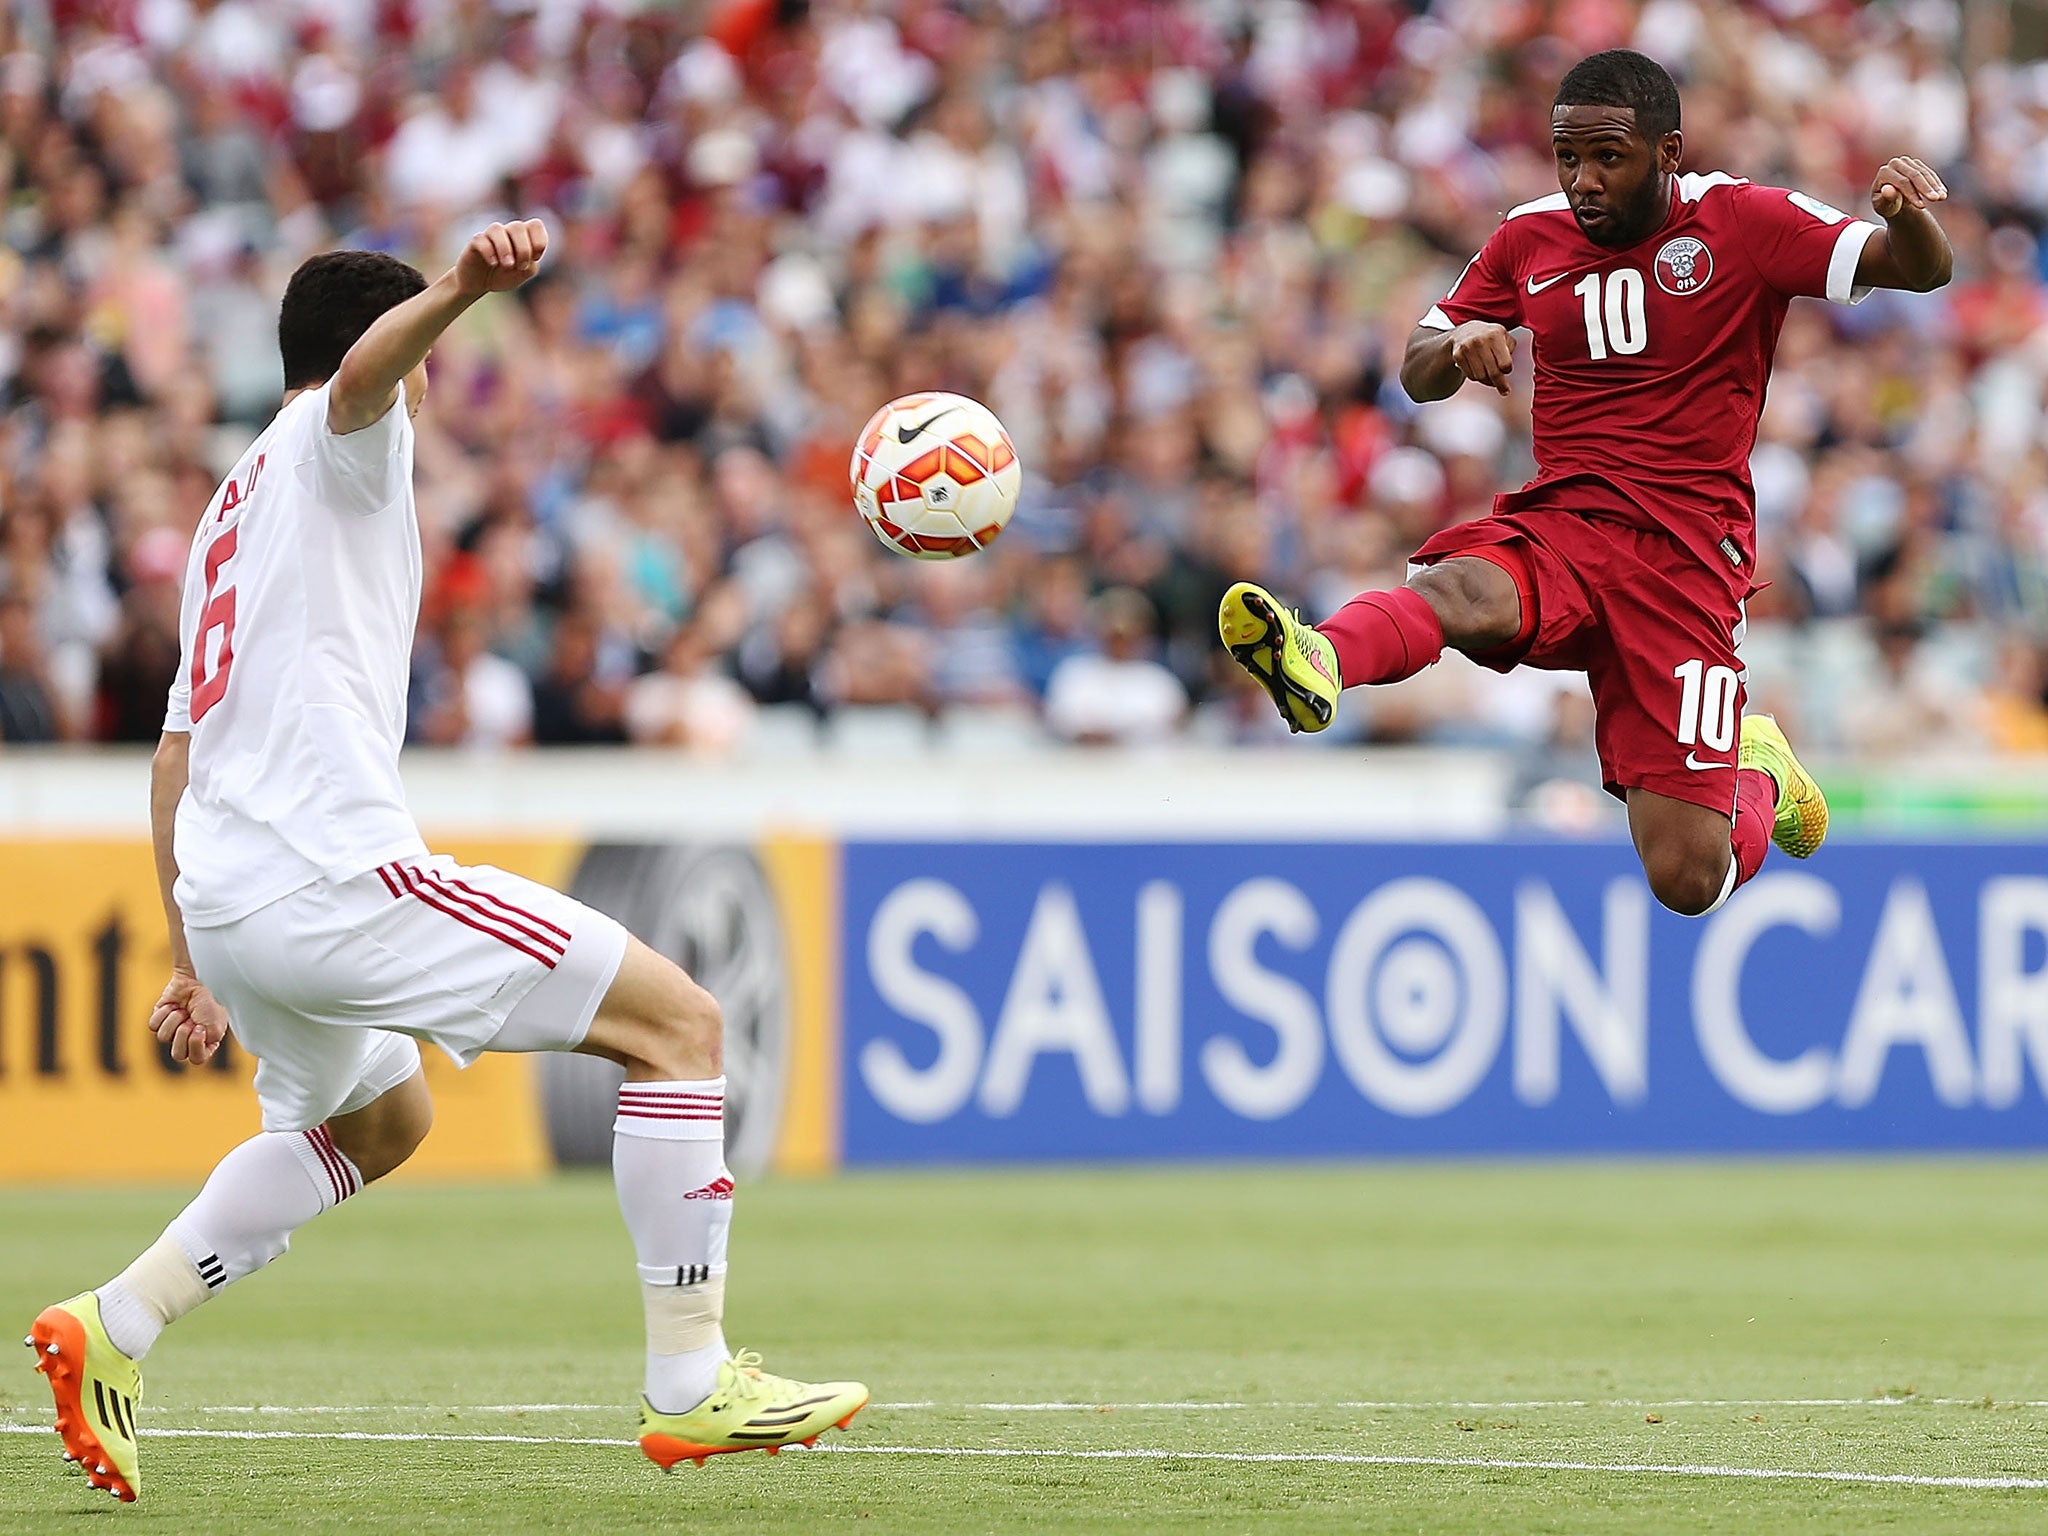 Khalfan Ibrahim of Qatar scores against the UAE